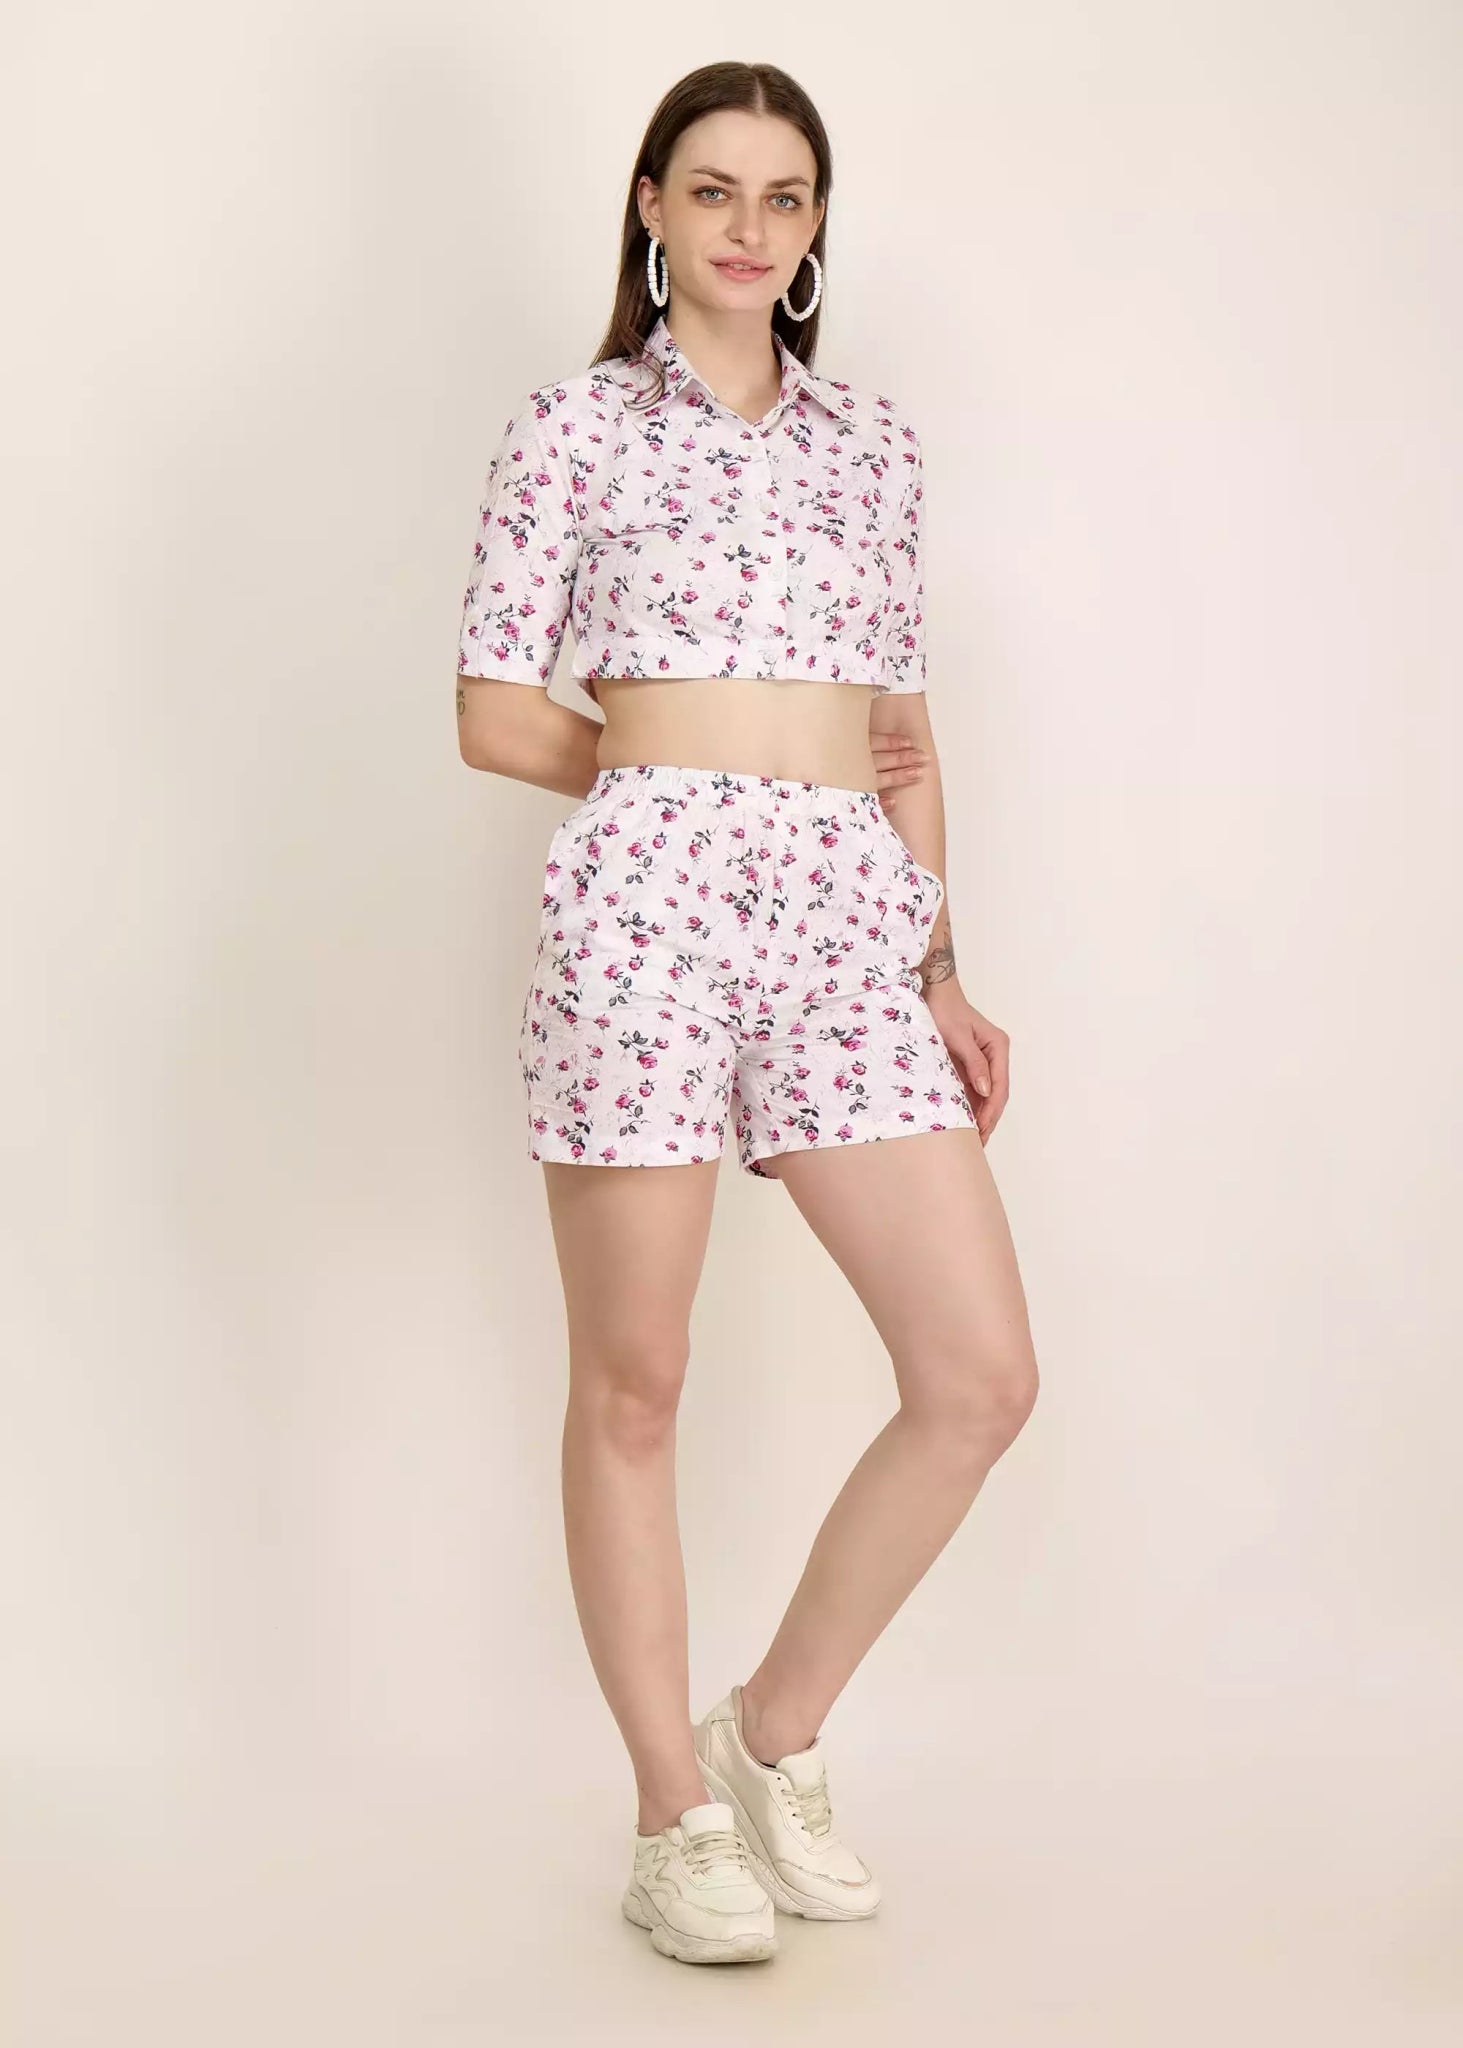 Women white shorts floral printed coord set - GargiStyle